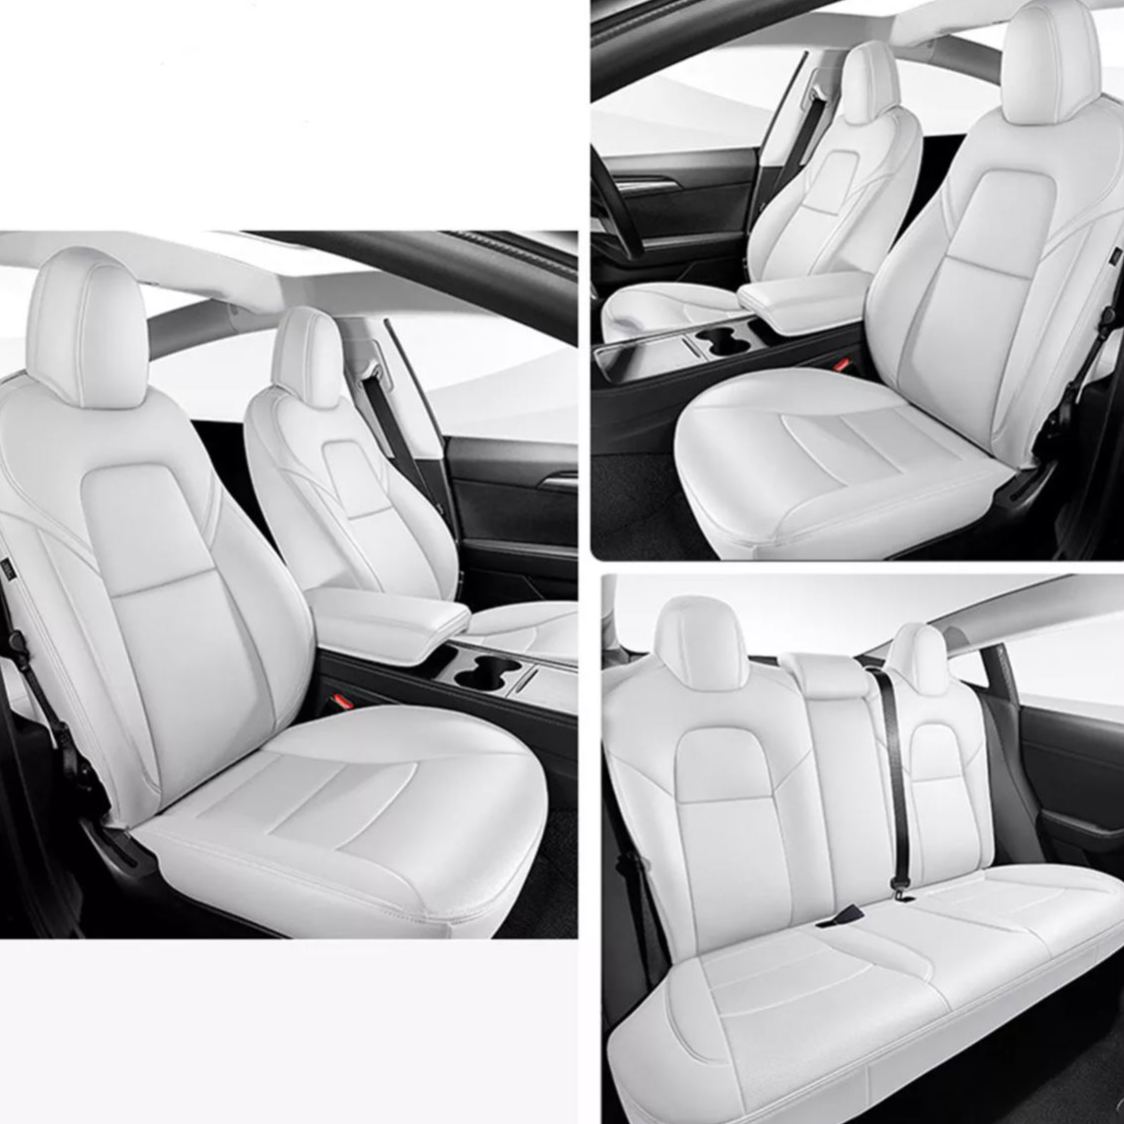  FanpBow Tesla Model Y Underseat Protector Cover, Seat